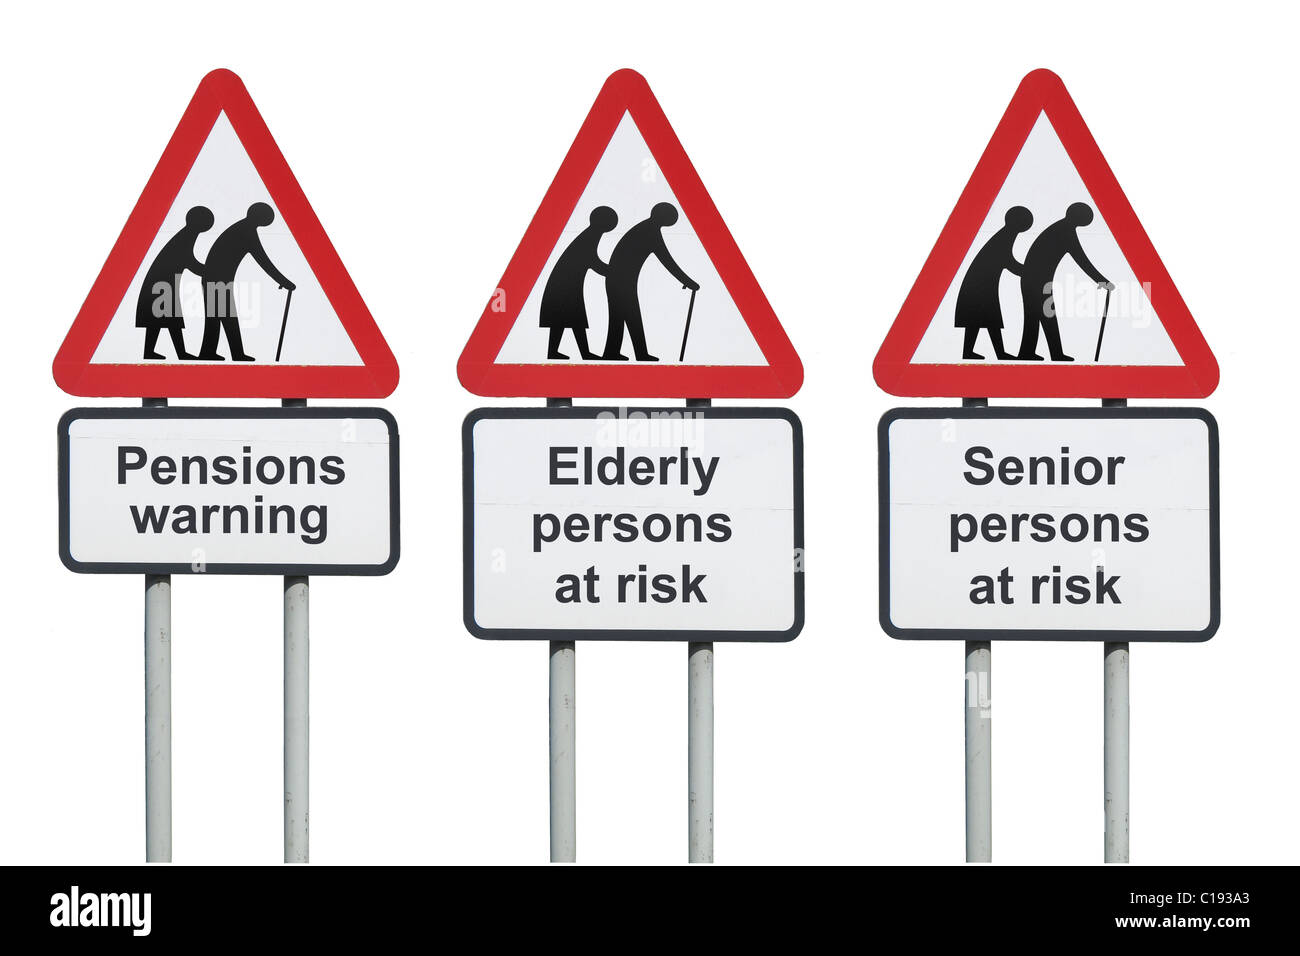 Pensions warning, elderly or seniors at risk road sign Stock Photo